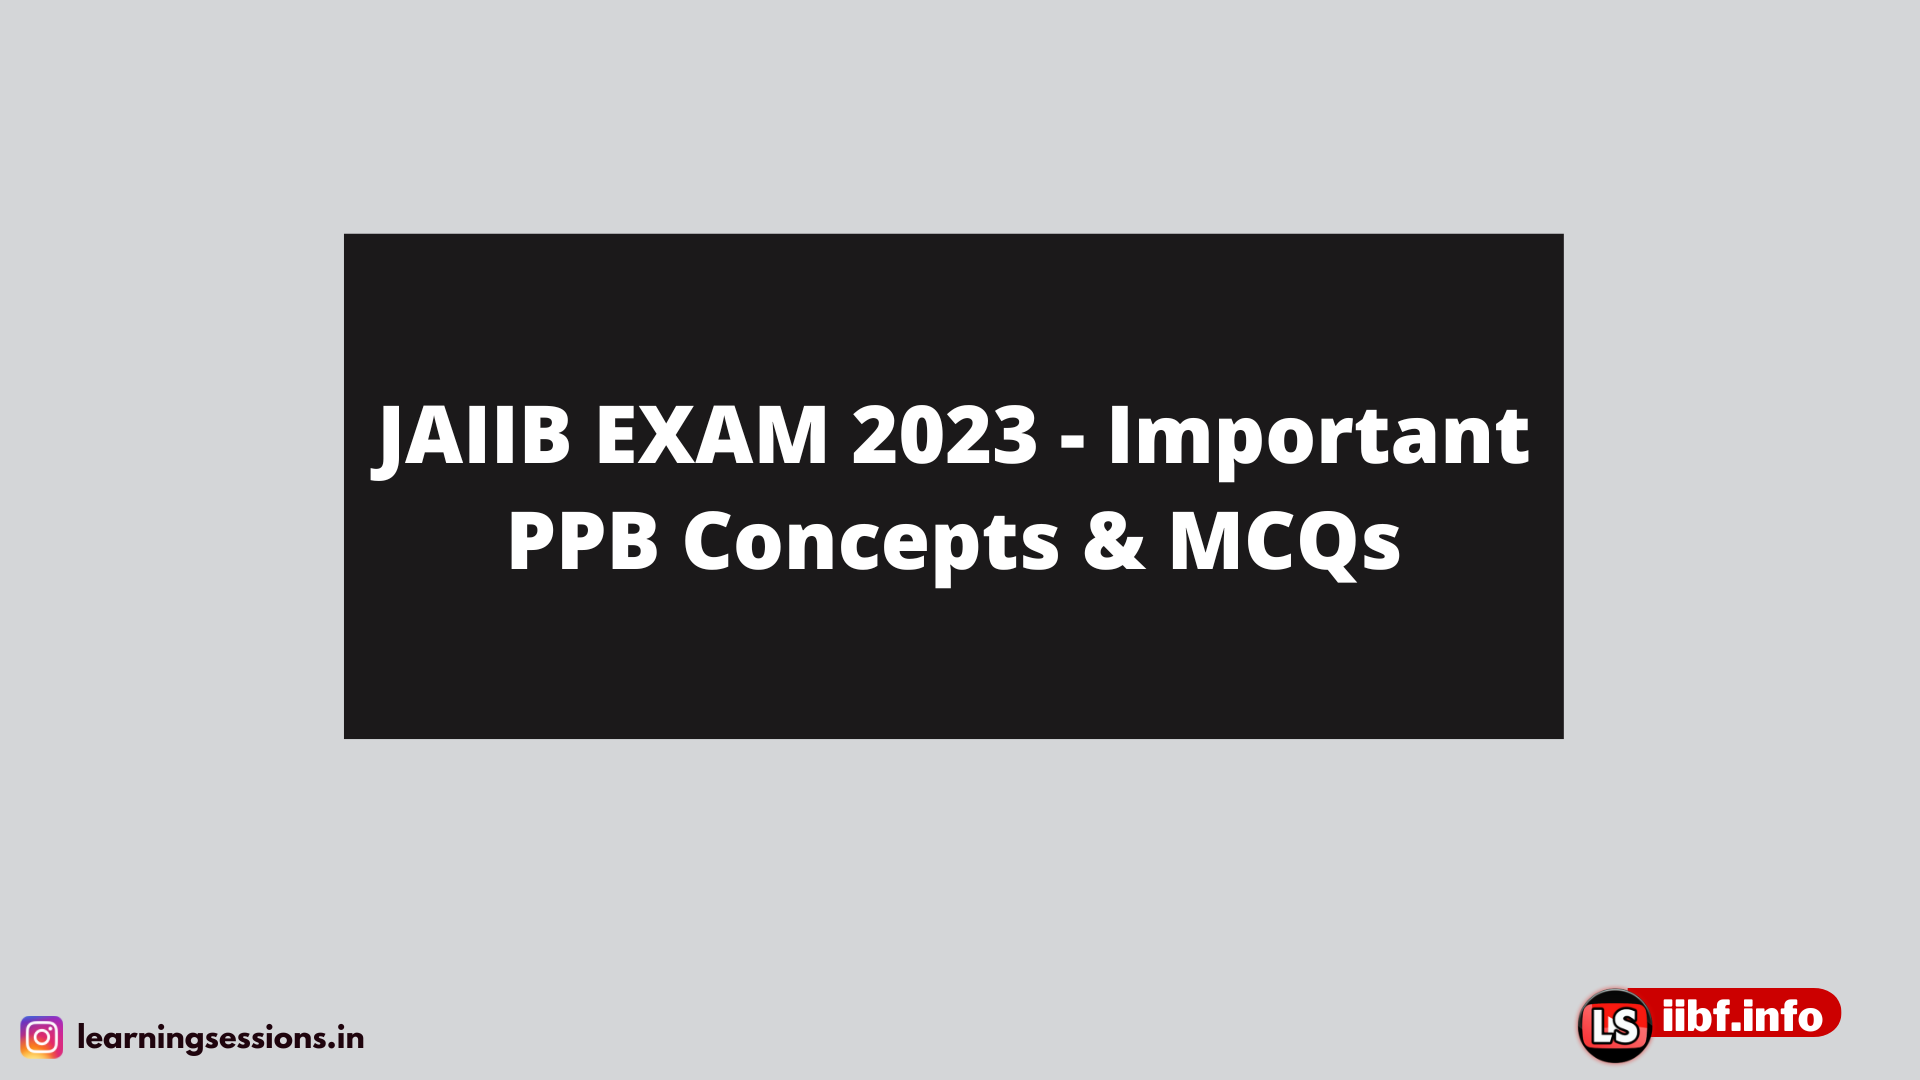 JAIIB EXAM 2023 - Important PPB Concepts & MCQs